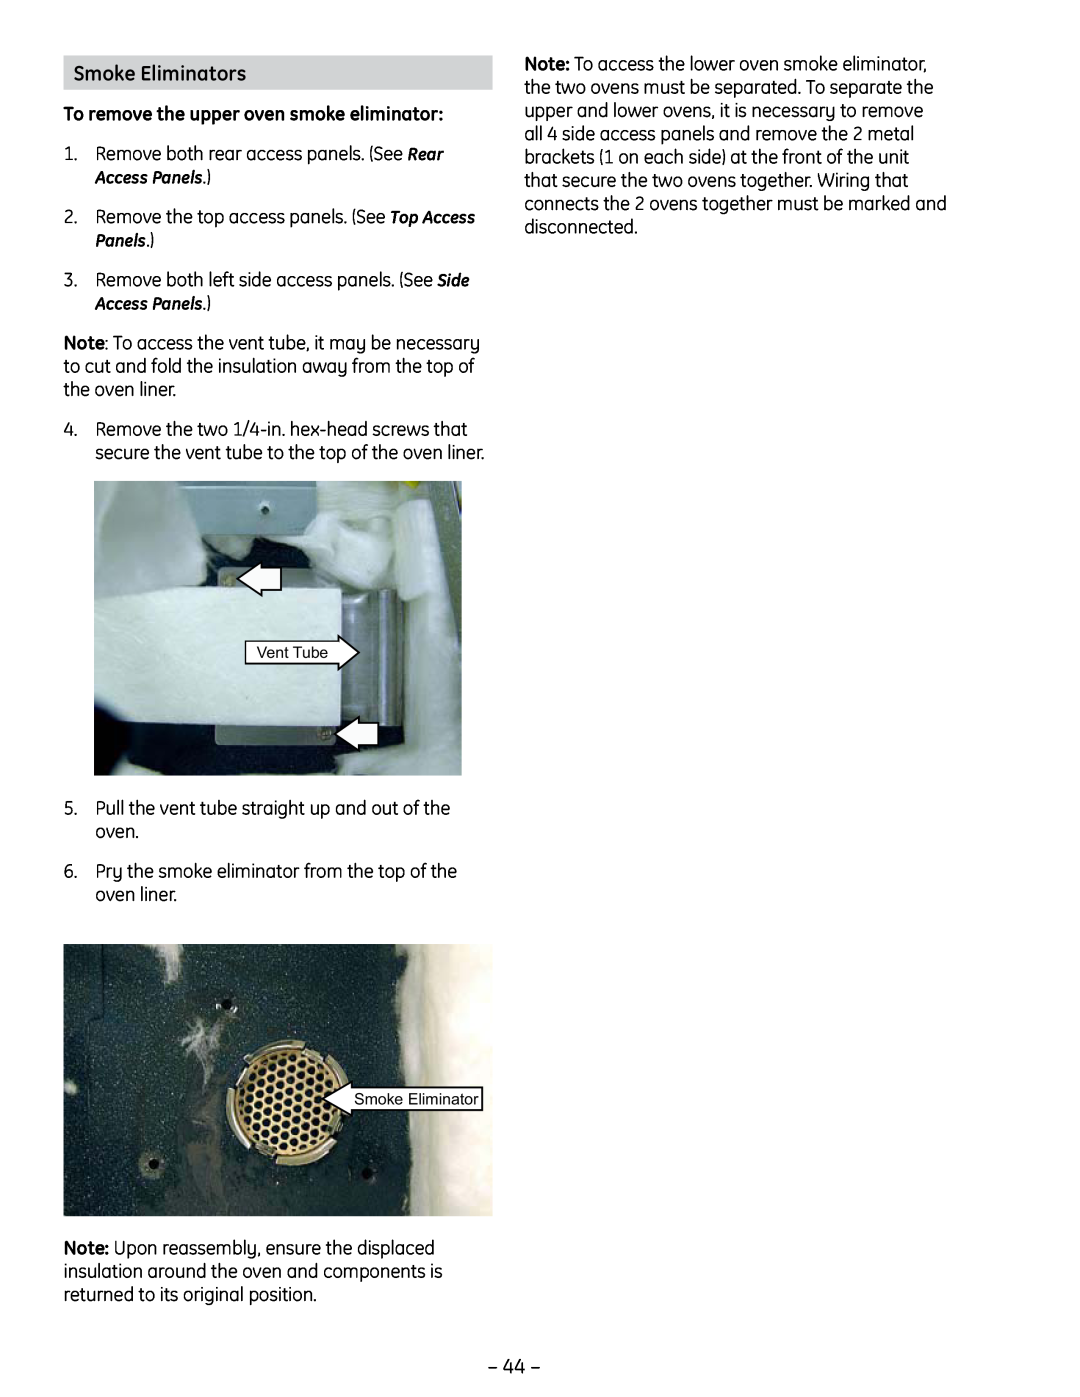 GE PT925 manual Smoke Eliminators, To remove the upper oven smoke eliminator 